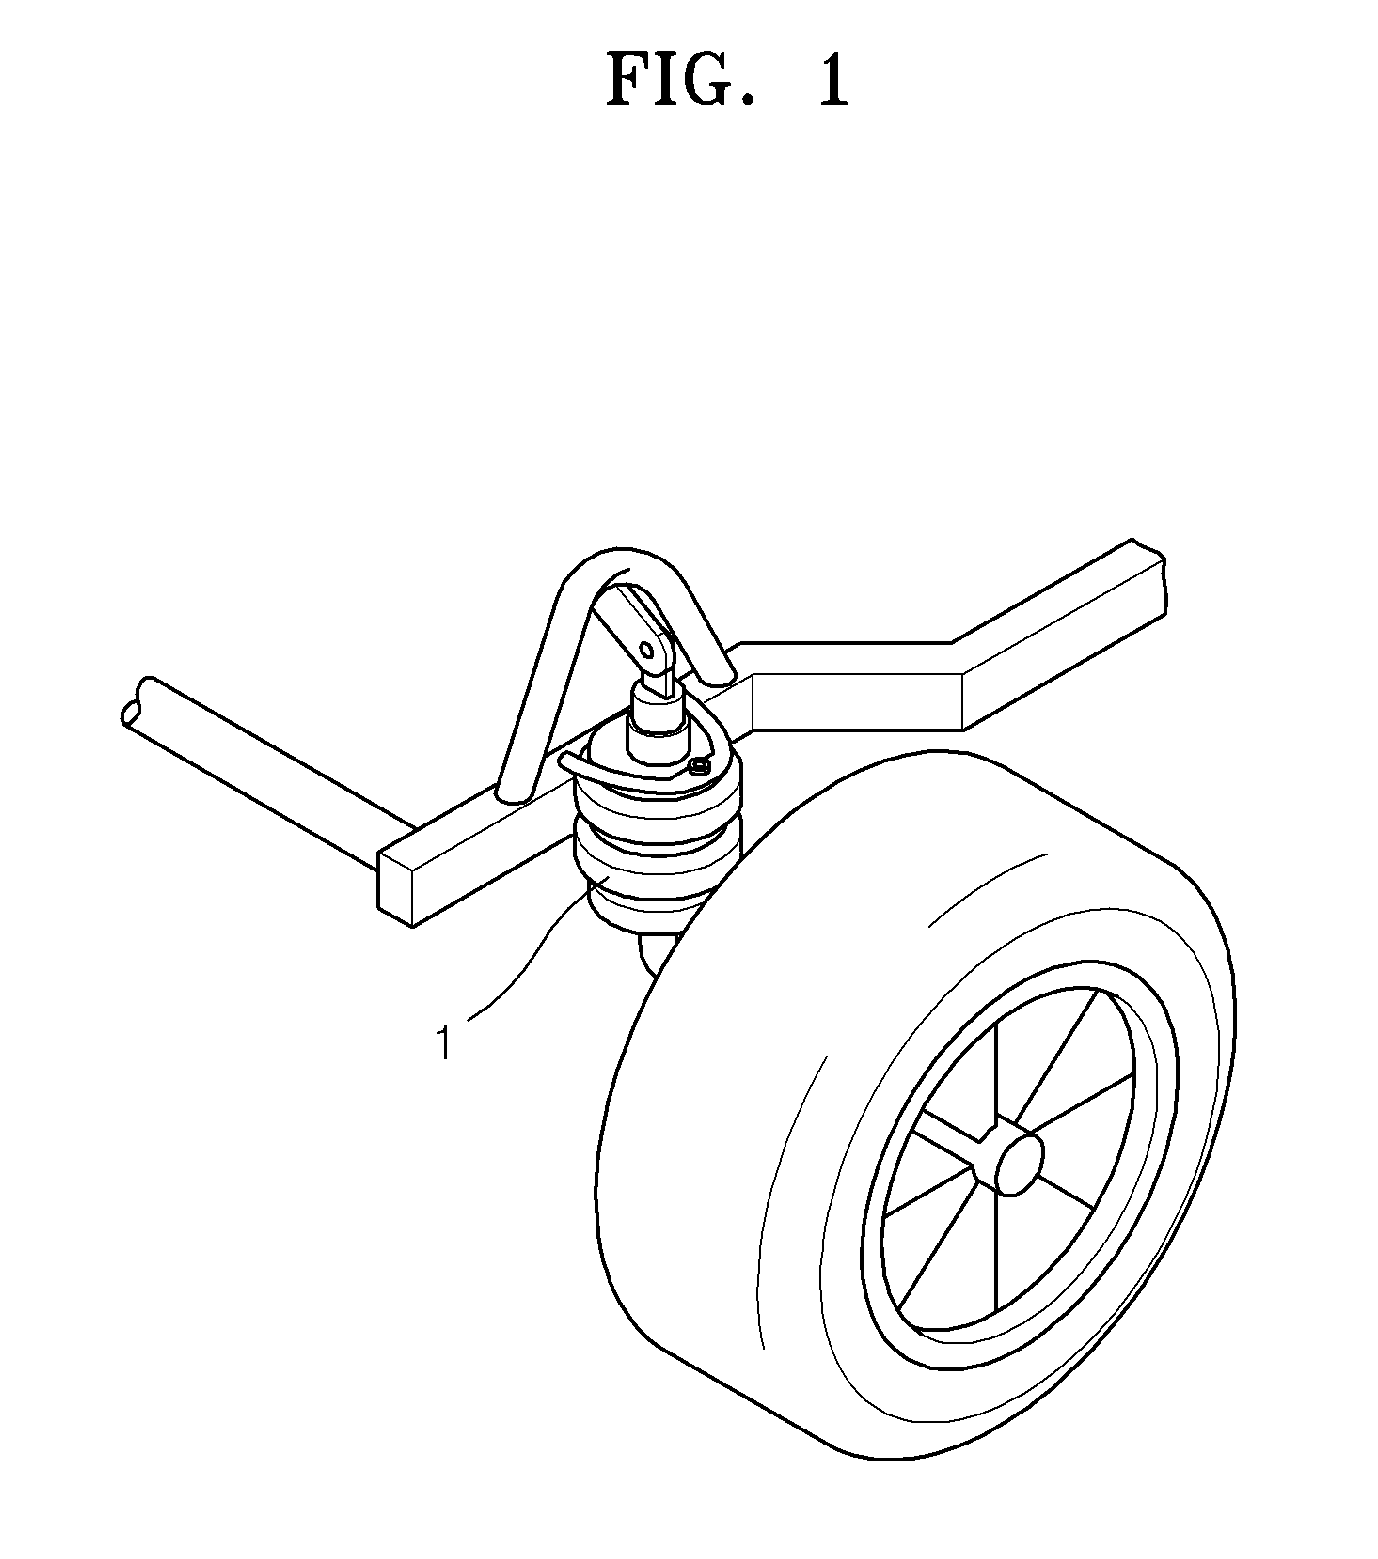 Arm-wheel type robotic vehicle comprising suspension system